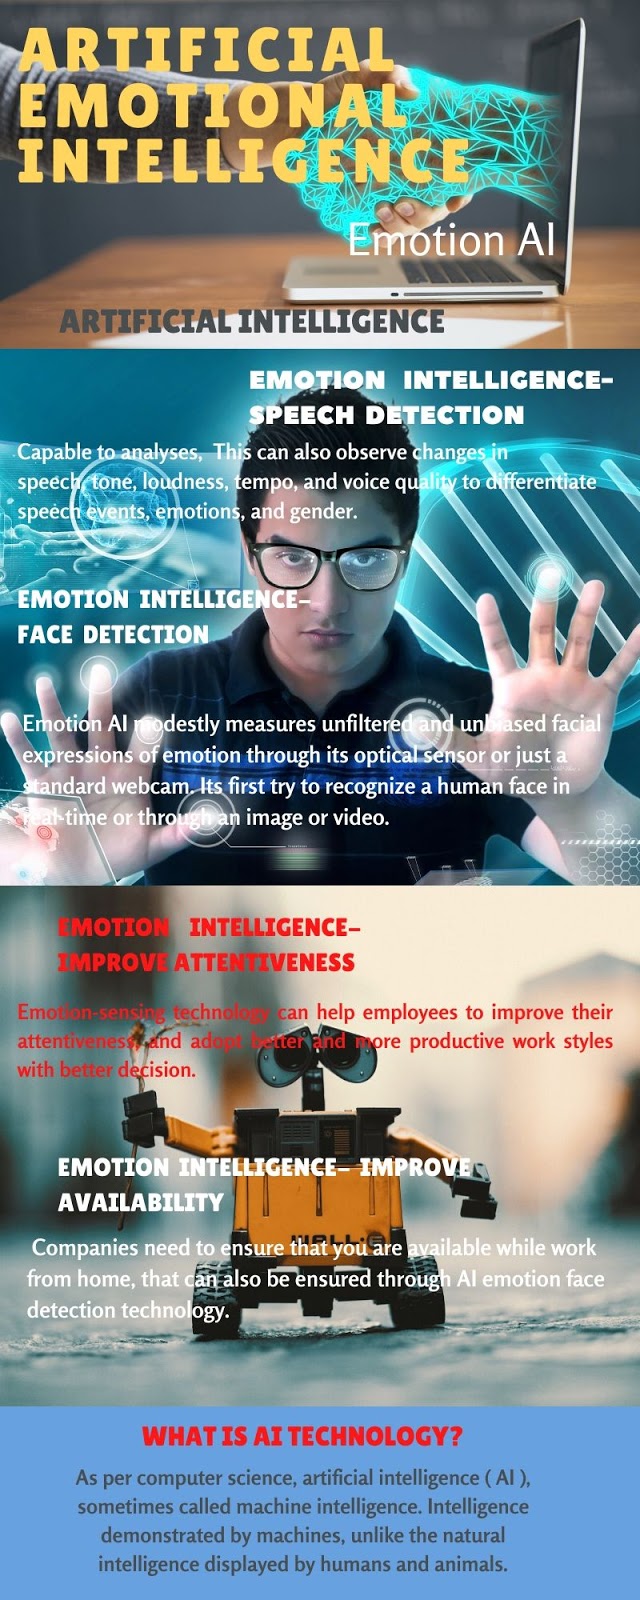 Artificial emotional intelligence